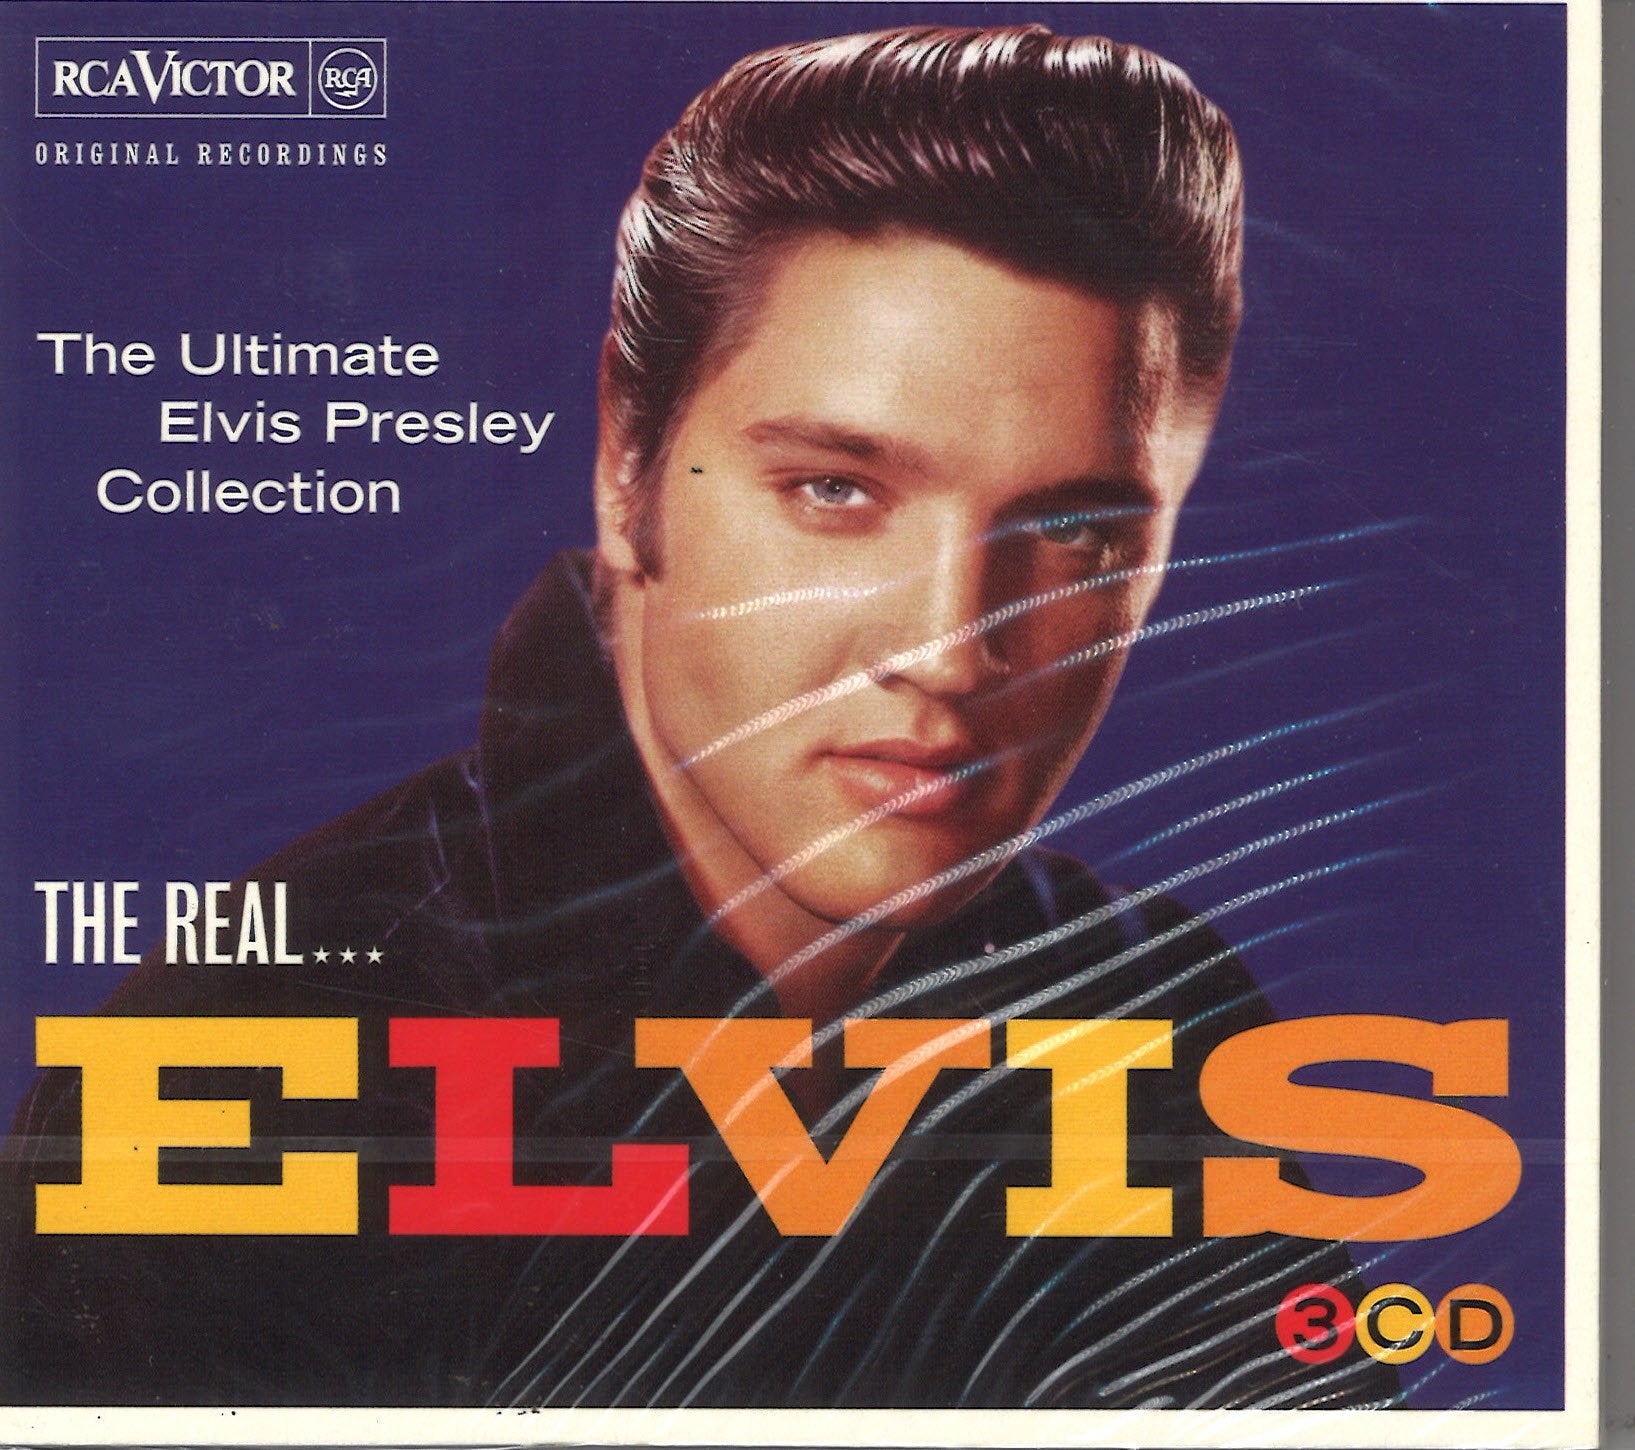 The Real Elvis Presley: 3 CD Set